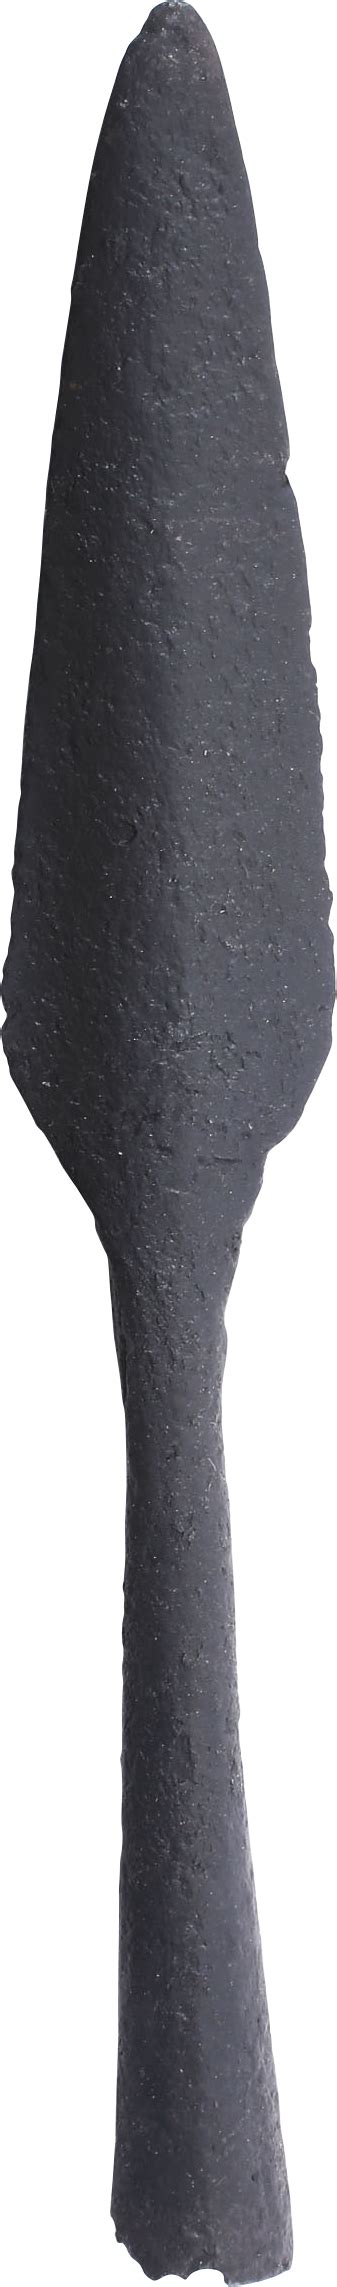 VIKING SOCKETED ARROWHEAD C.850-1000 AD – Fagan Arms